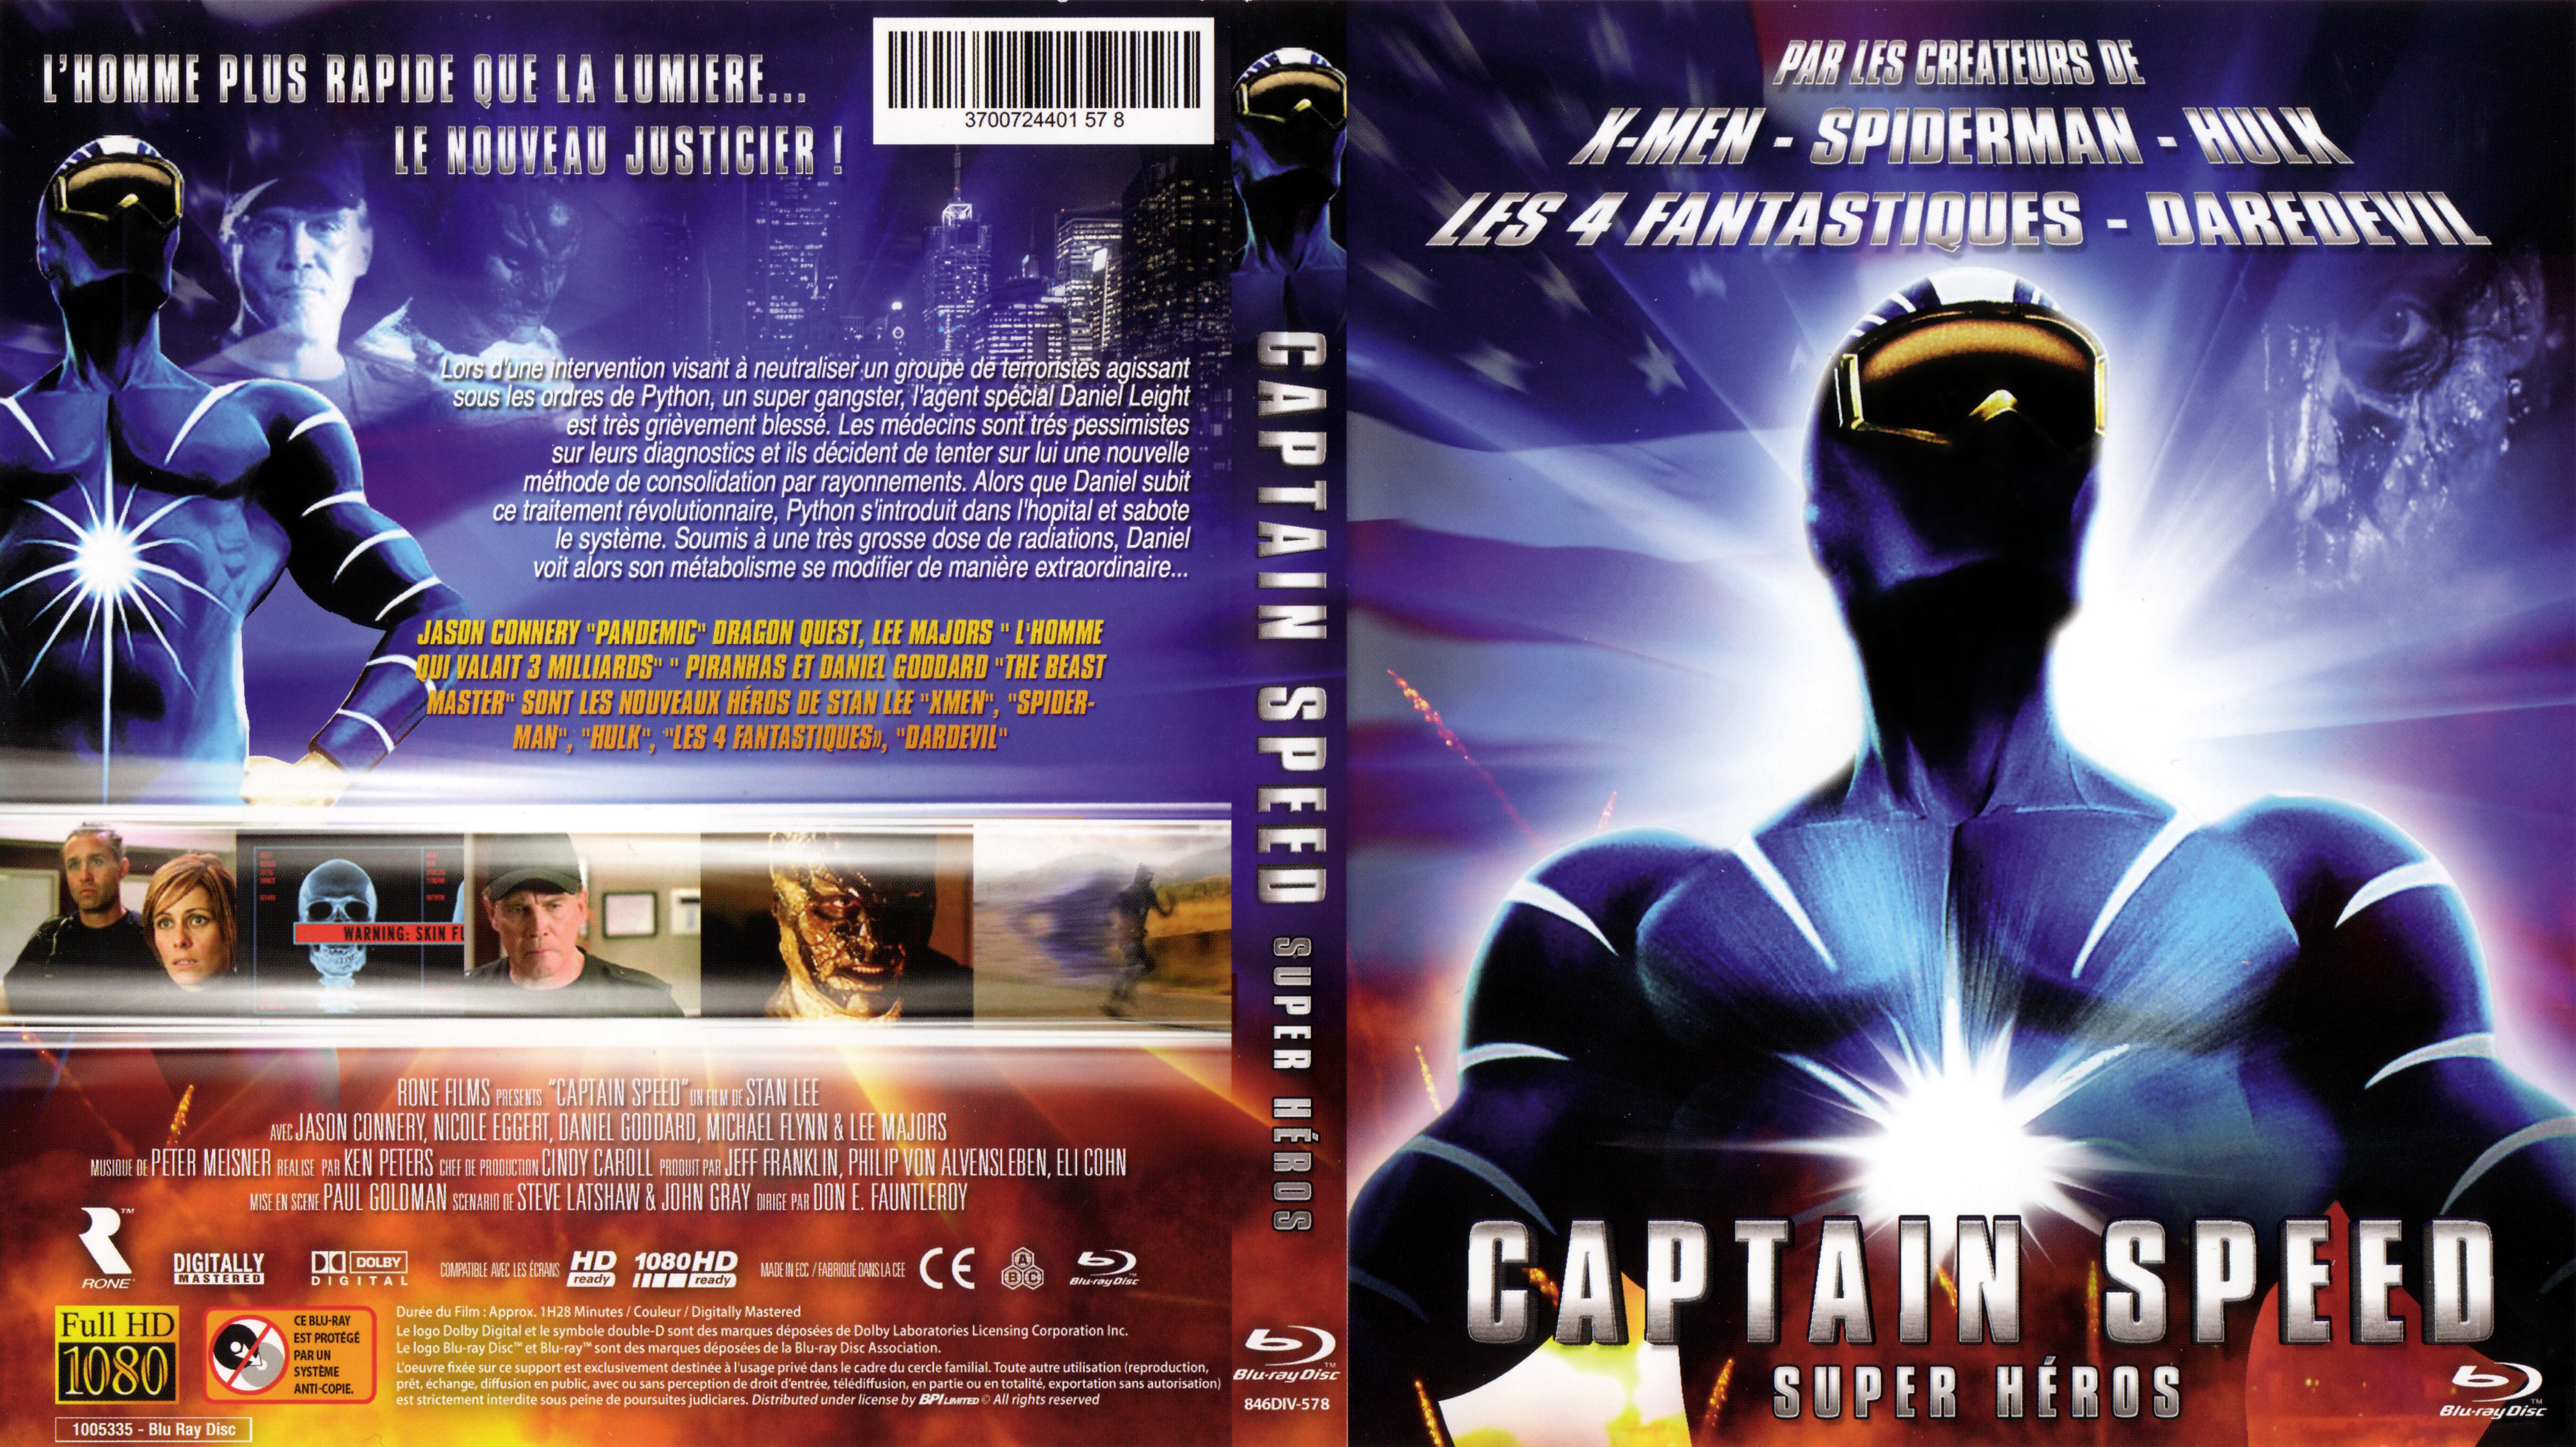 Jaquette DVD Captain speed super hero (BLU-RAY)